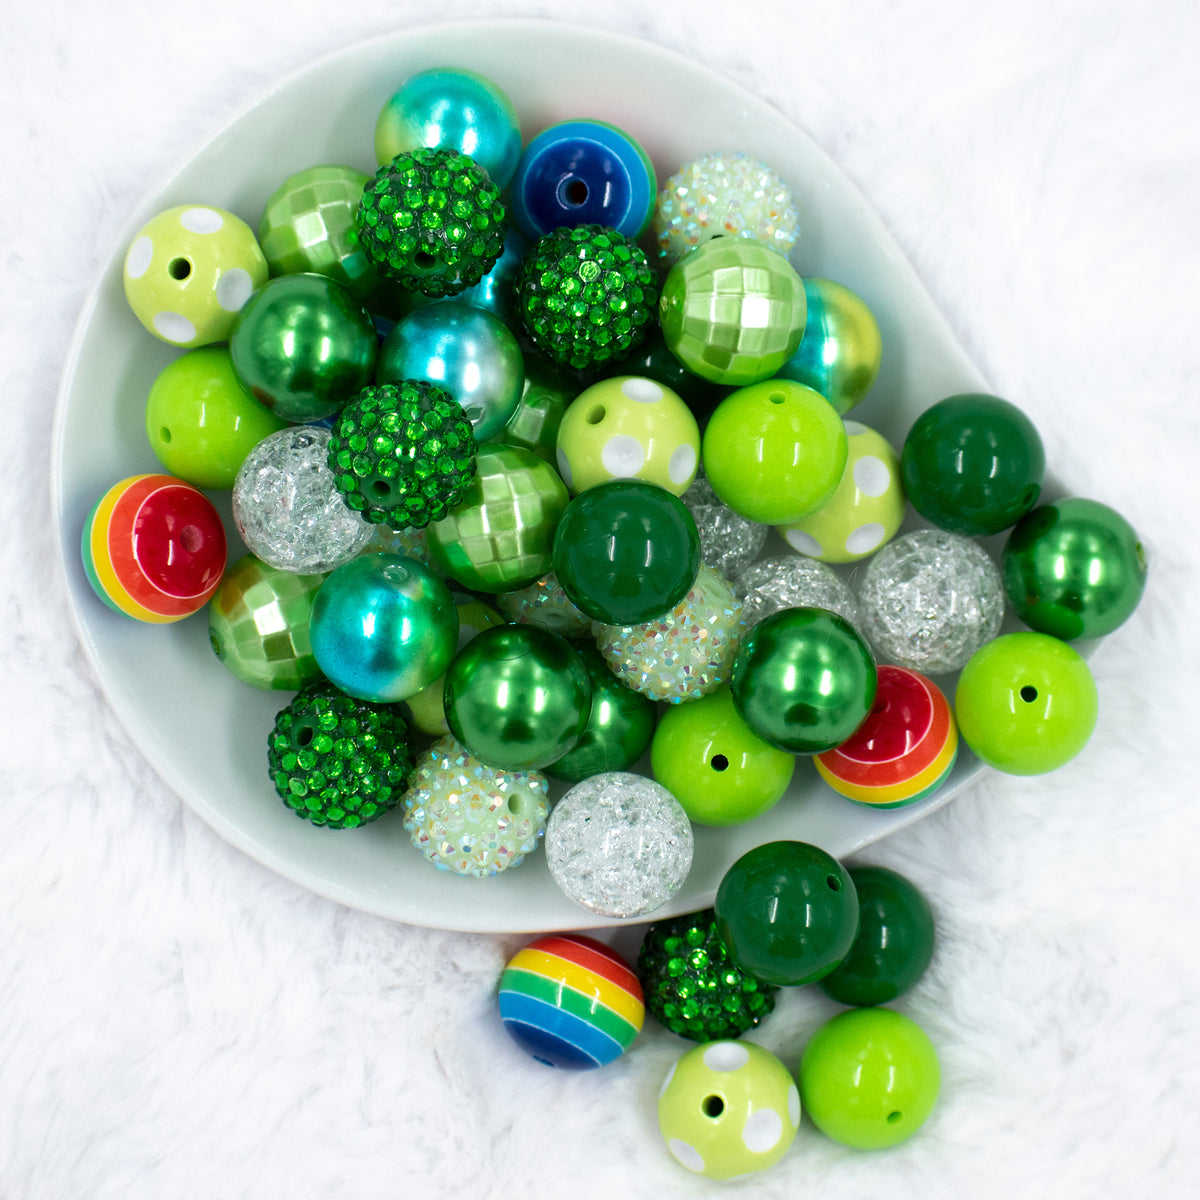 Lucky Me Felt Balls - 100% Wool Felt Balls - 50 Wool Felt Balls - St.  Patrick's Day Garland - Irish Colors - St. Patrick's Felt balls - Fun